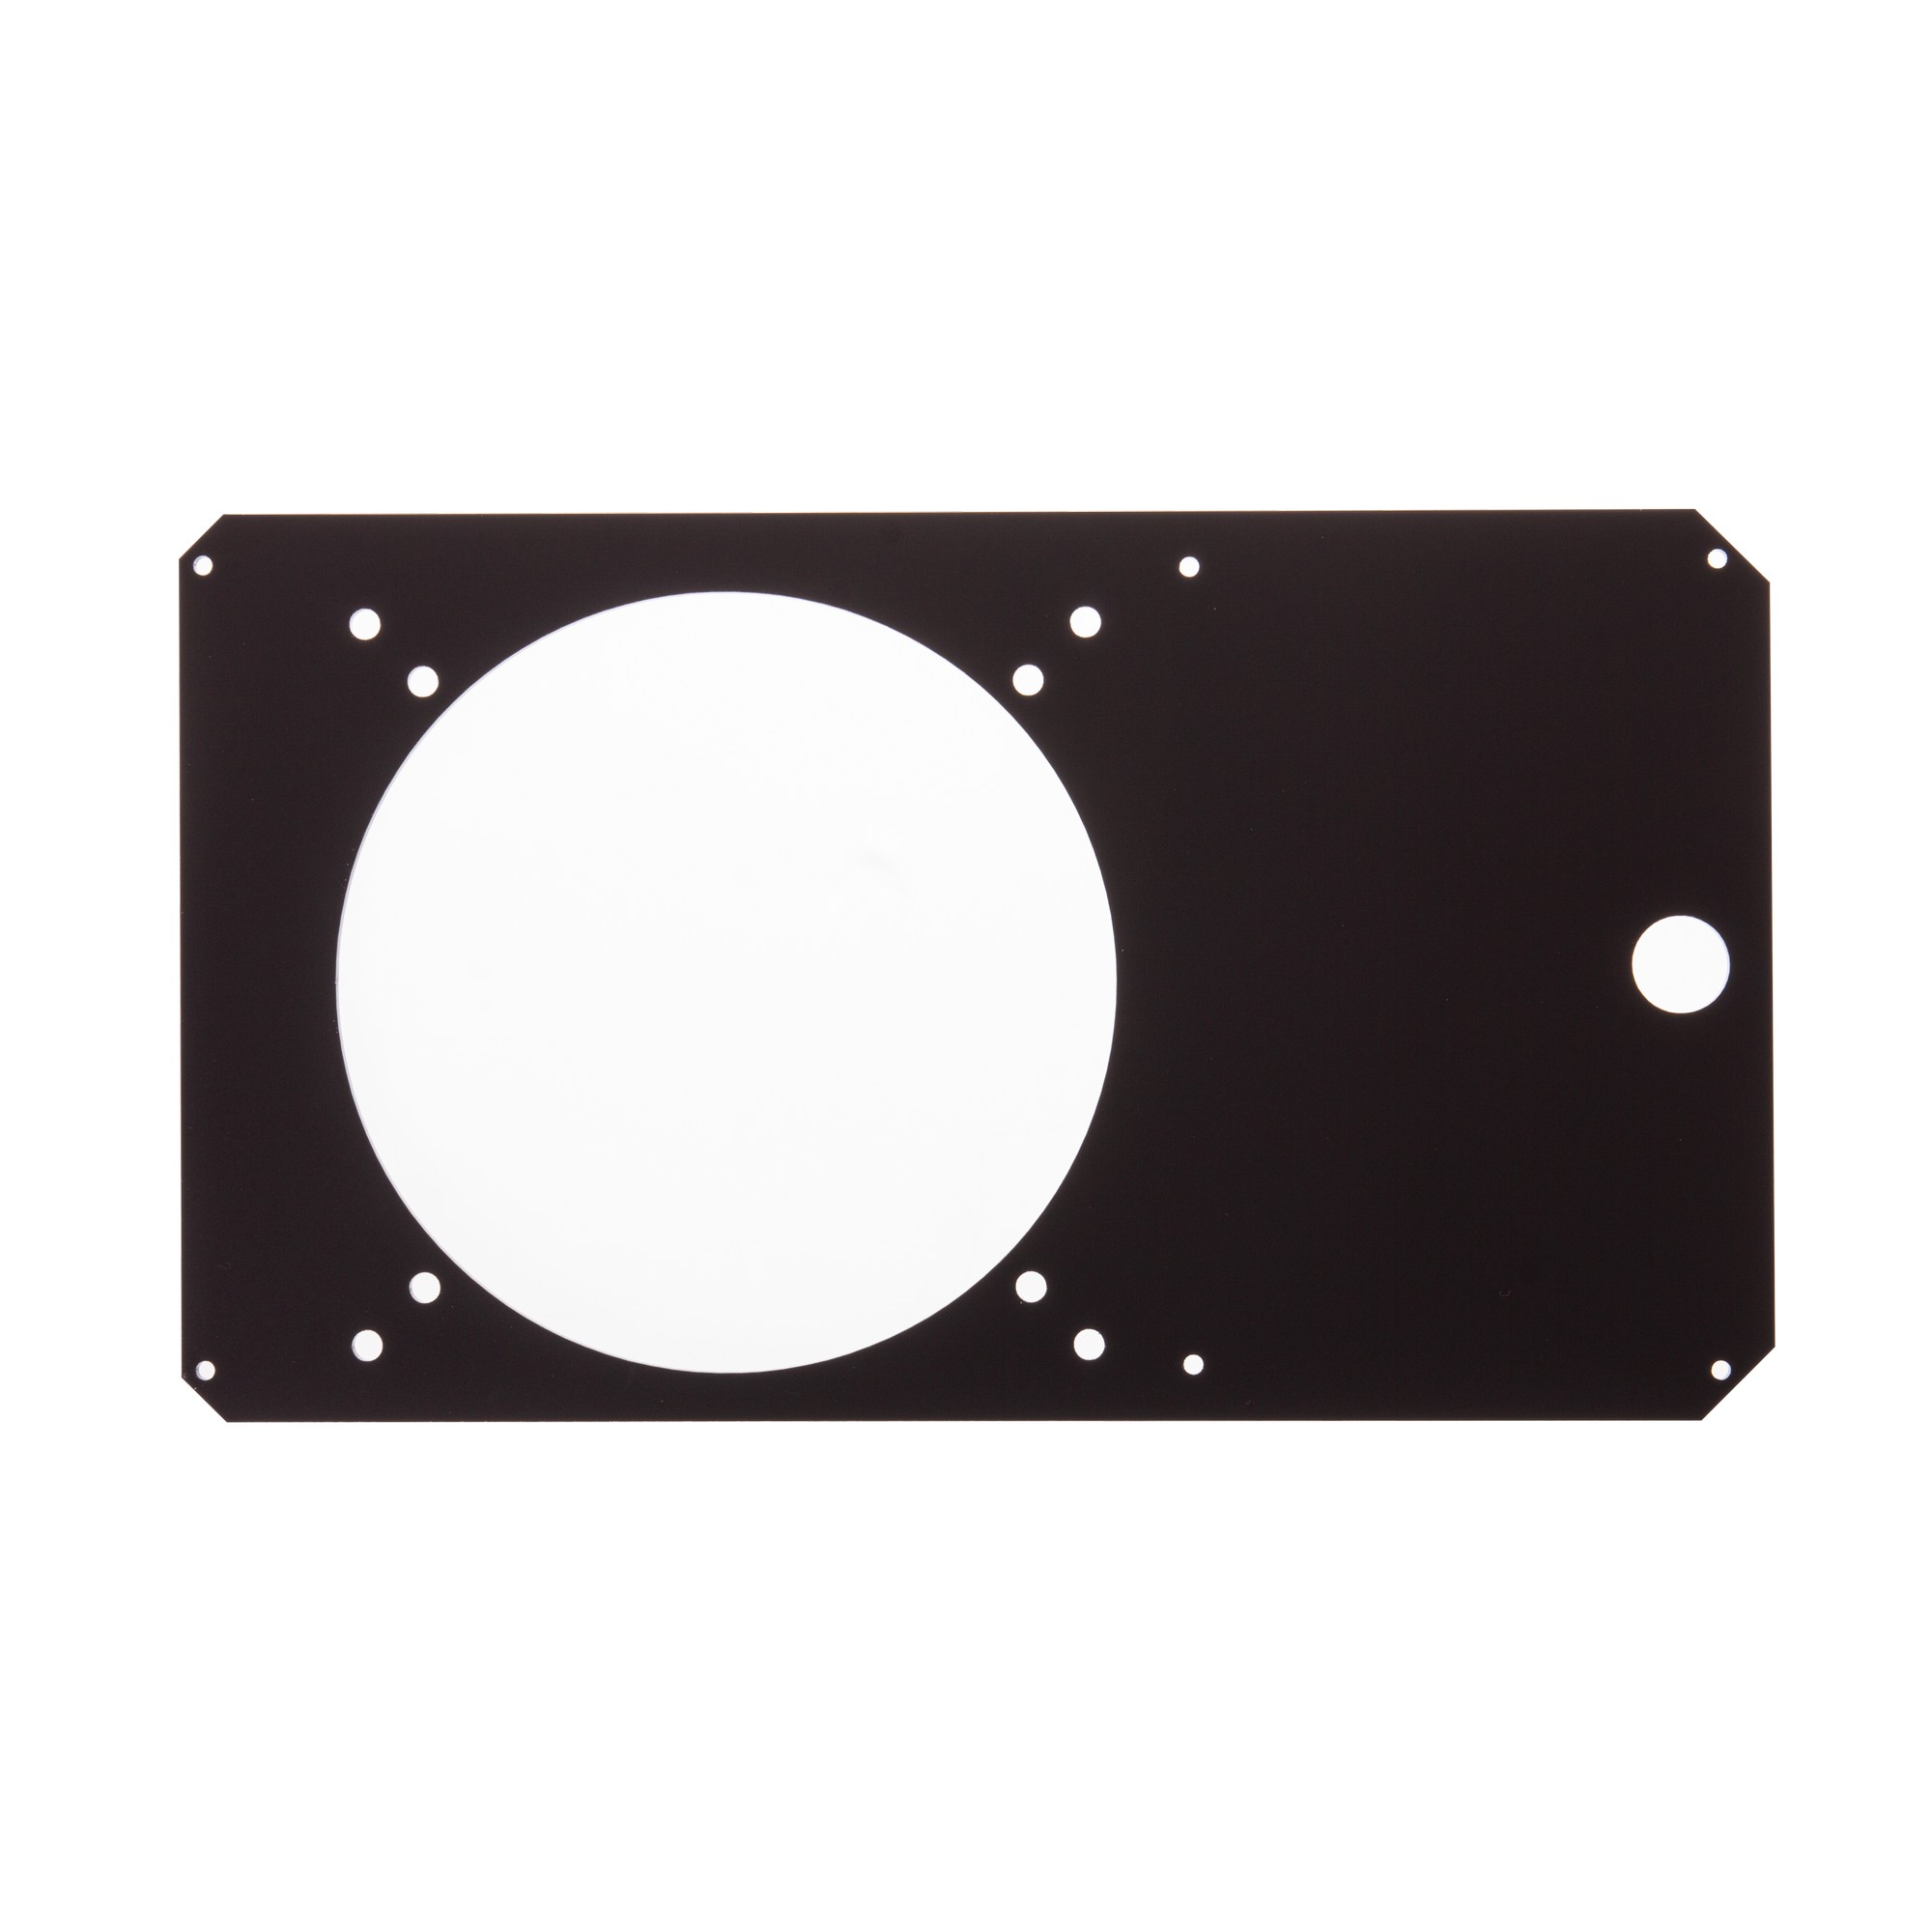 Lazer3D - Lazer3D LZ7 XTD Right Panel (16mm Vandal) - Midnight Black Open